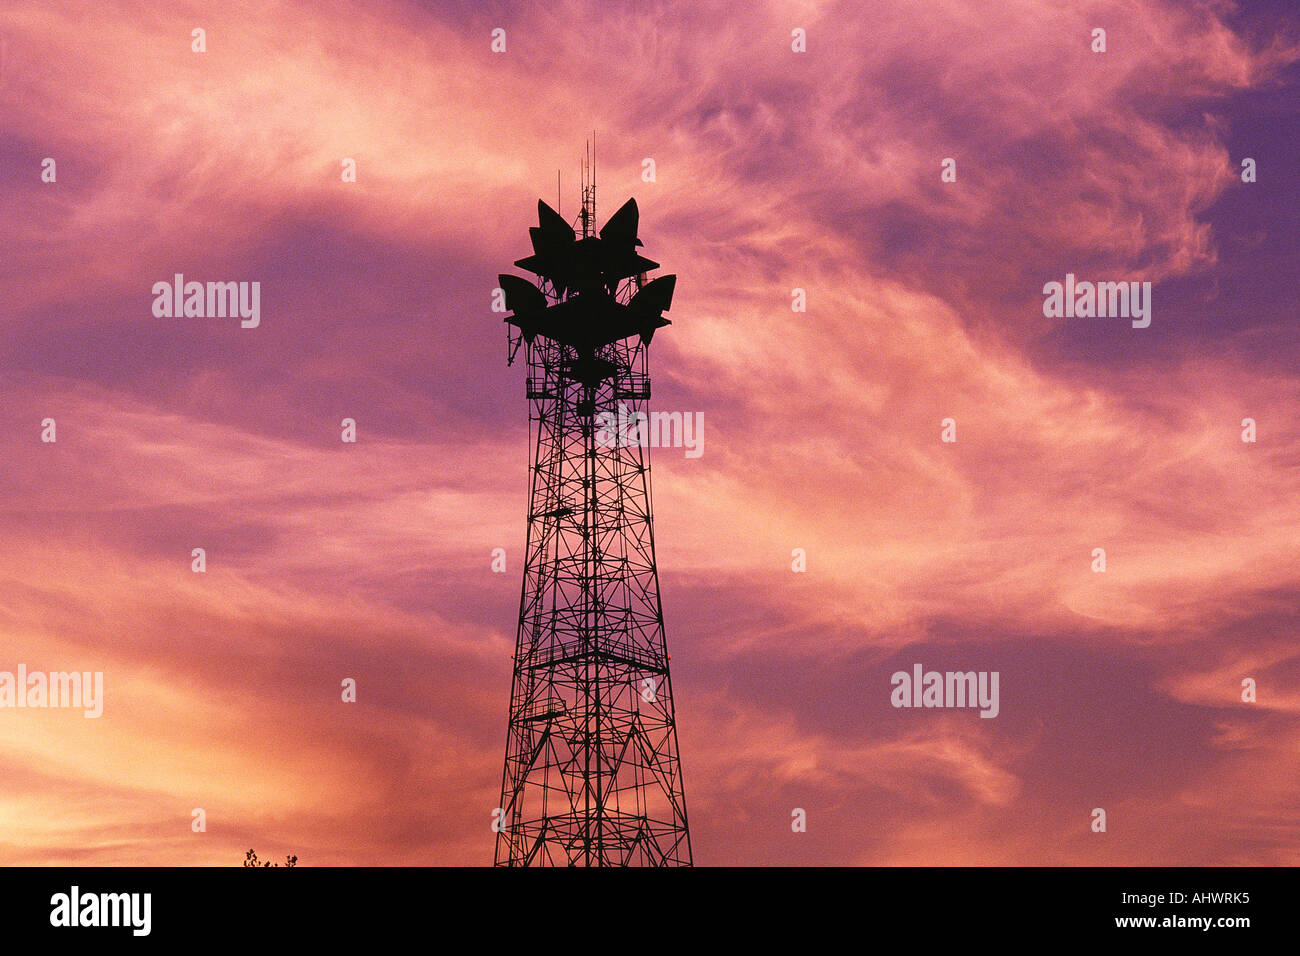 Air traffic signal antenna Stock Photo